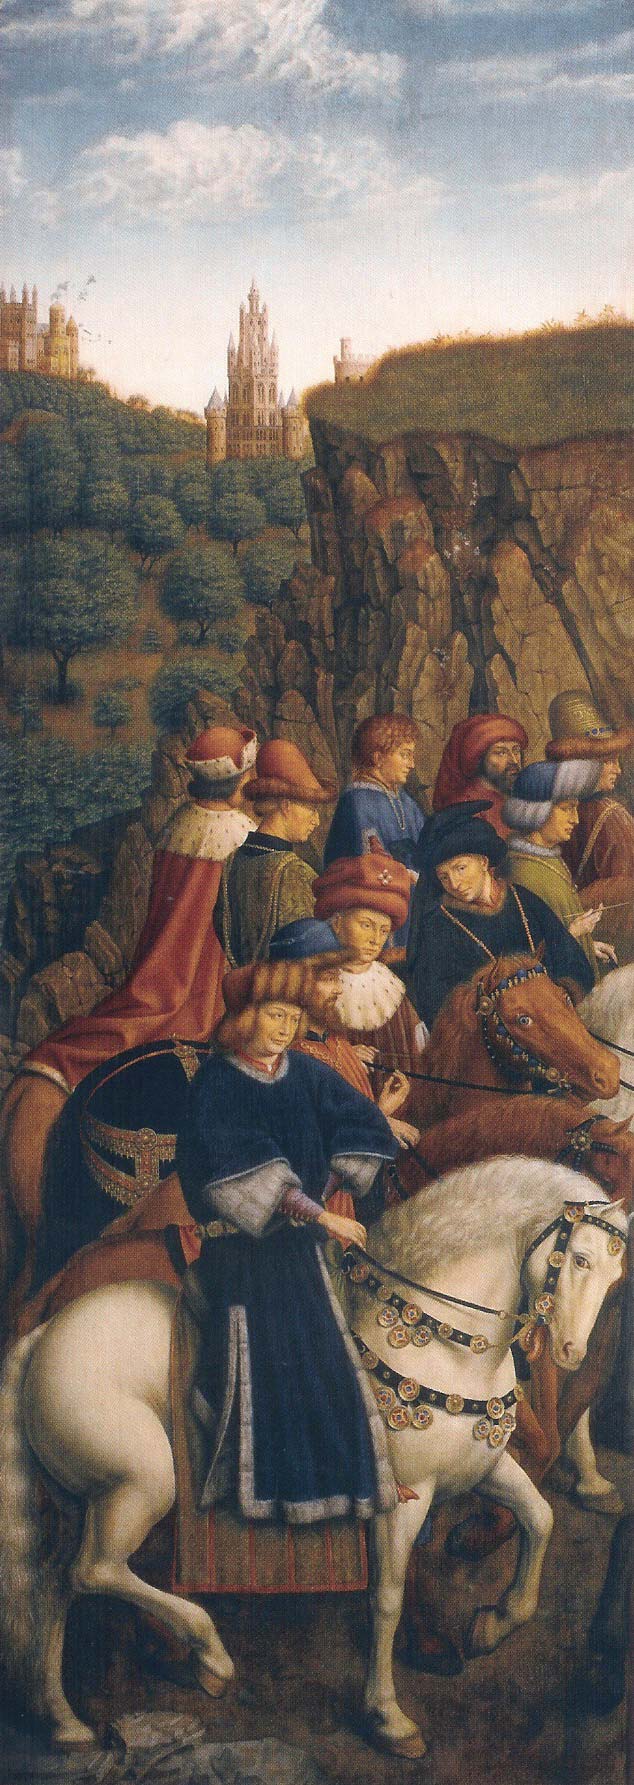 Jan van Eyck, 'Just Judges' missing panel from 'Ghent Altarpiece,' 1432, reproduction painted by Vanderveken. Public domain image via Wikipedia